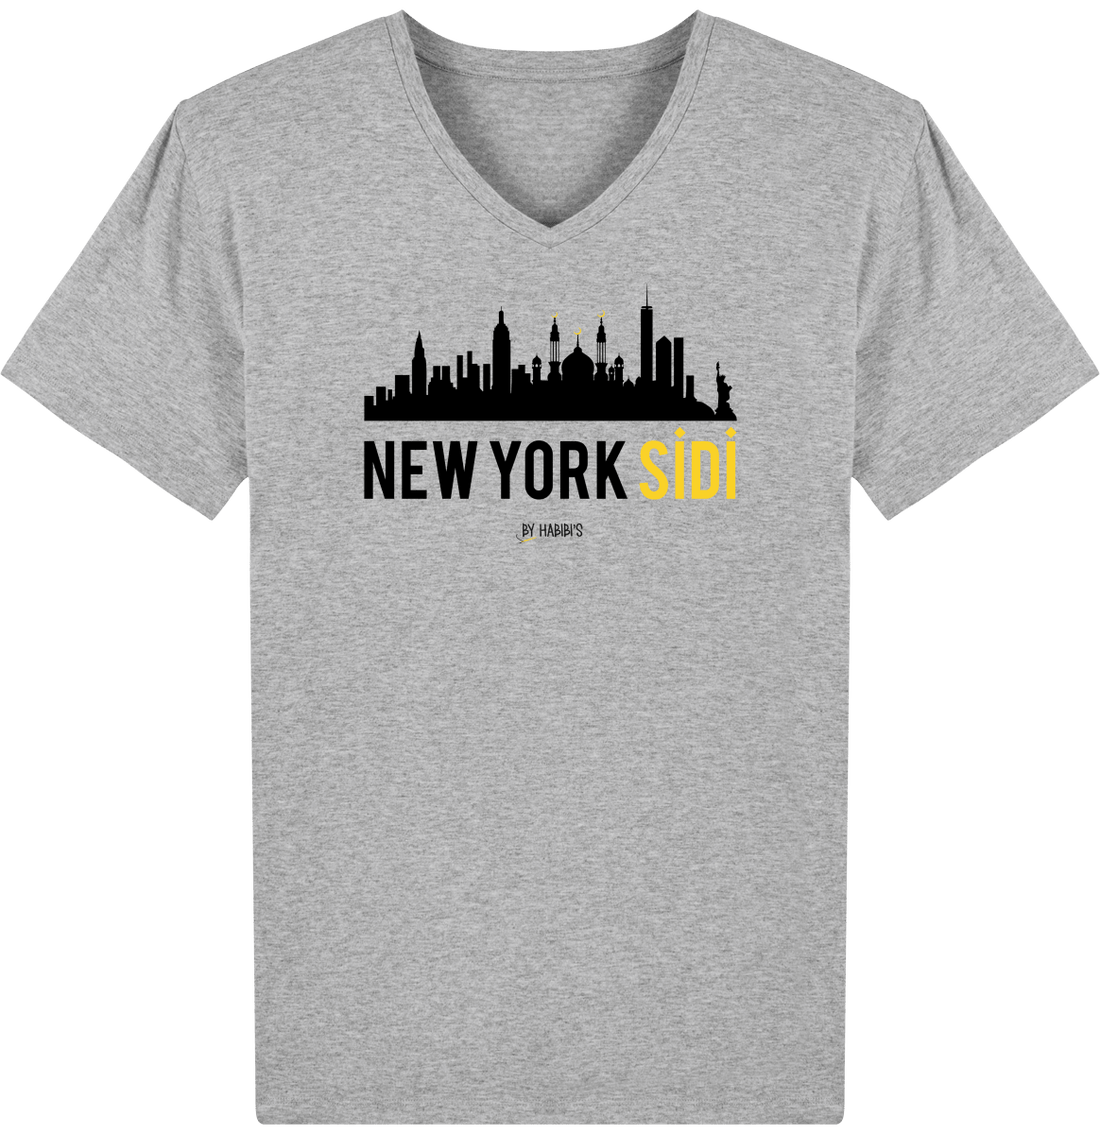 Homme>Tee-shirts - T-Shirt Homme Col V New York Sidi